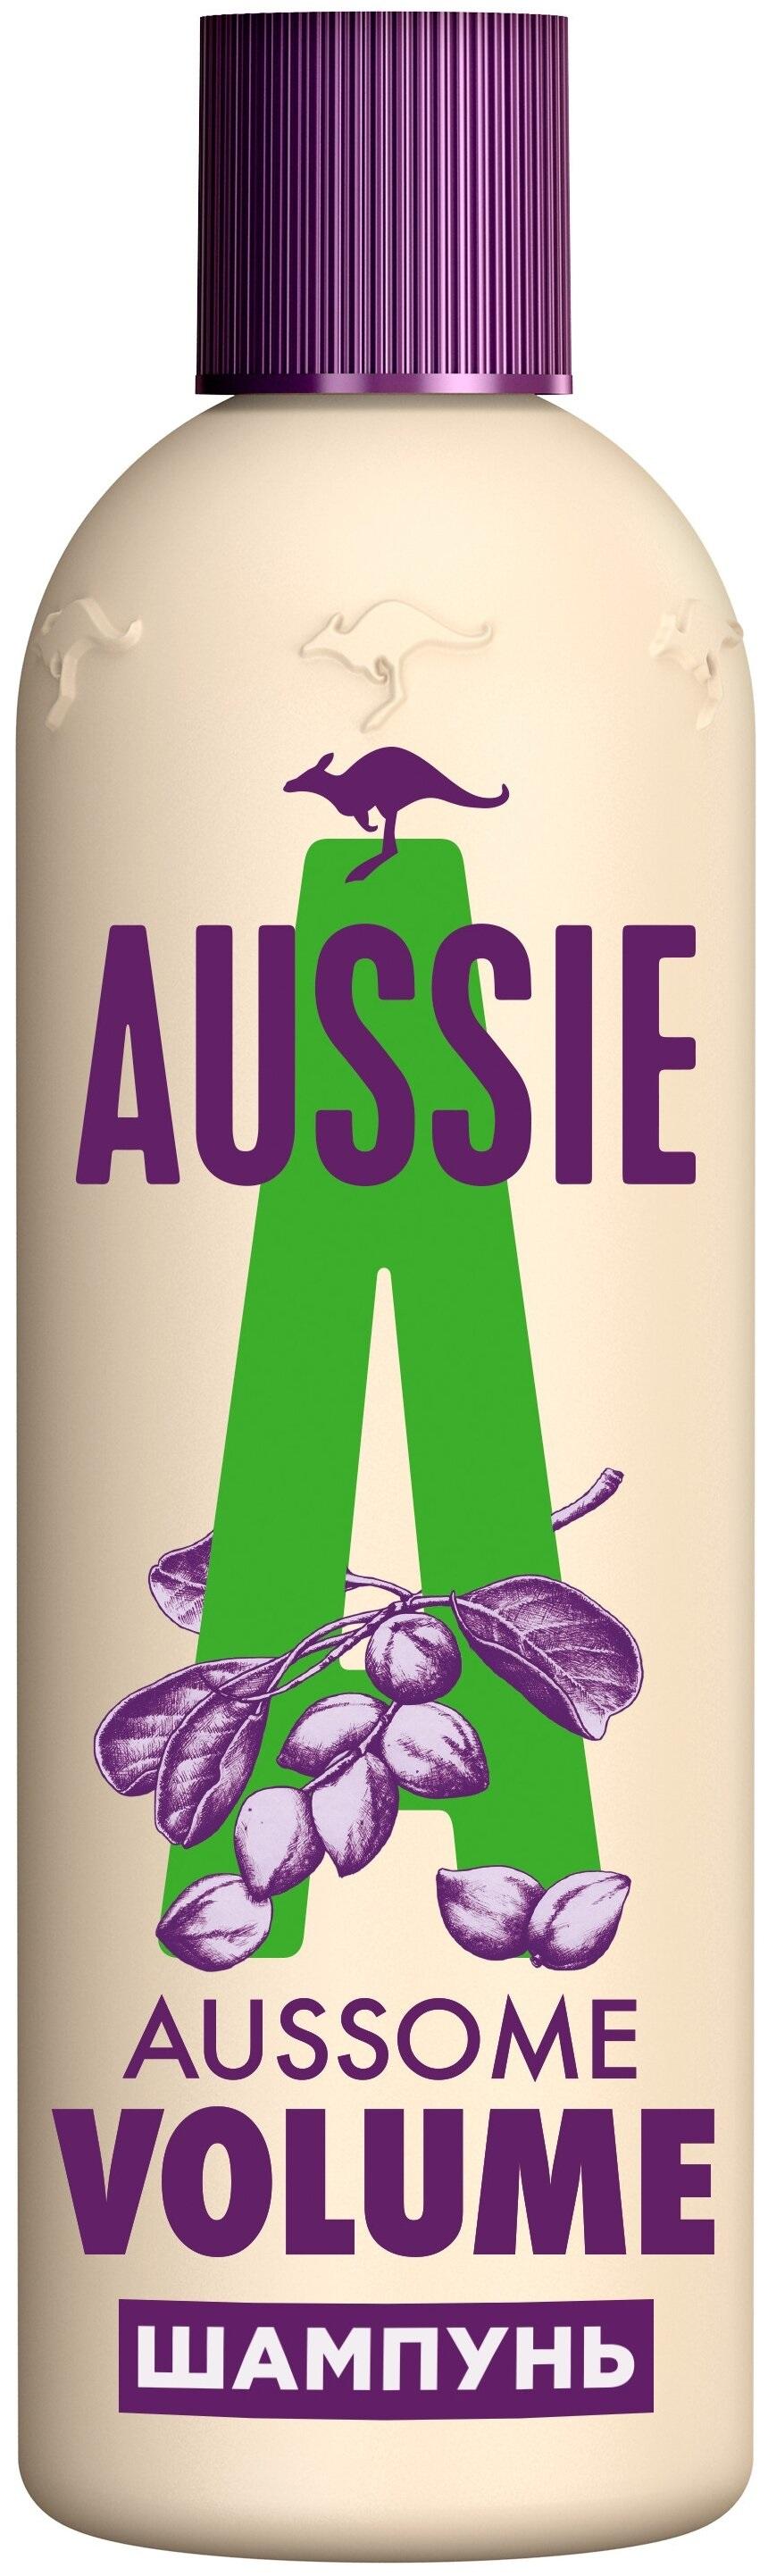 Aussie Aussome Volume для придания объема с австралийской сливой